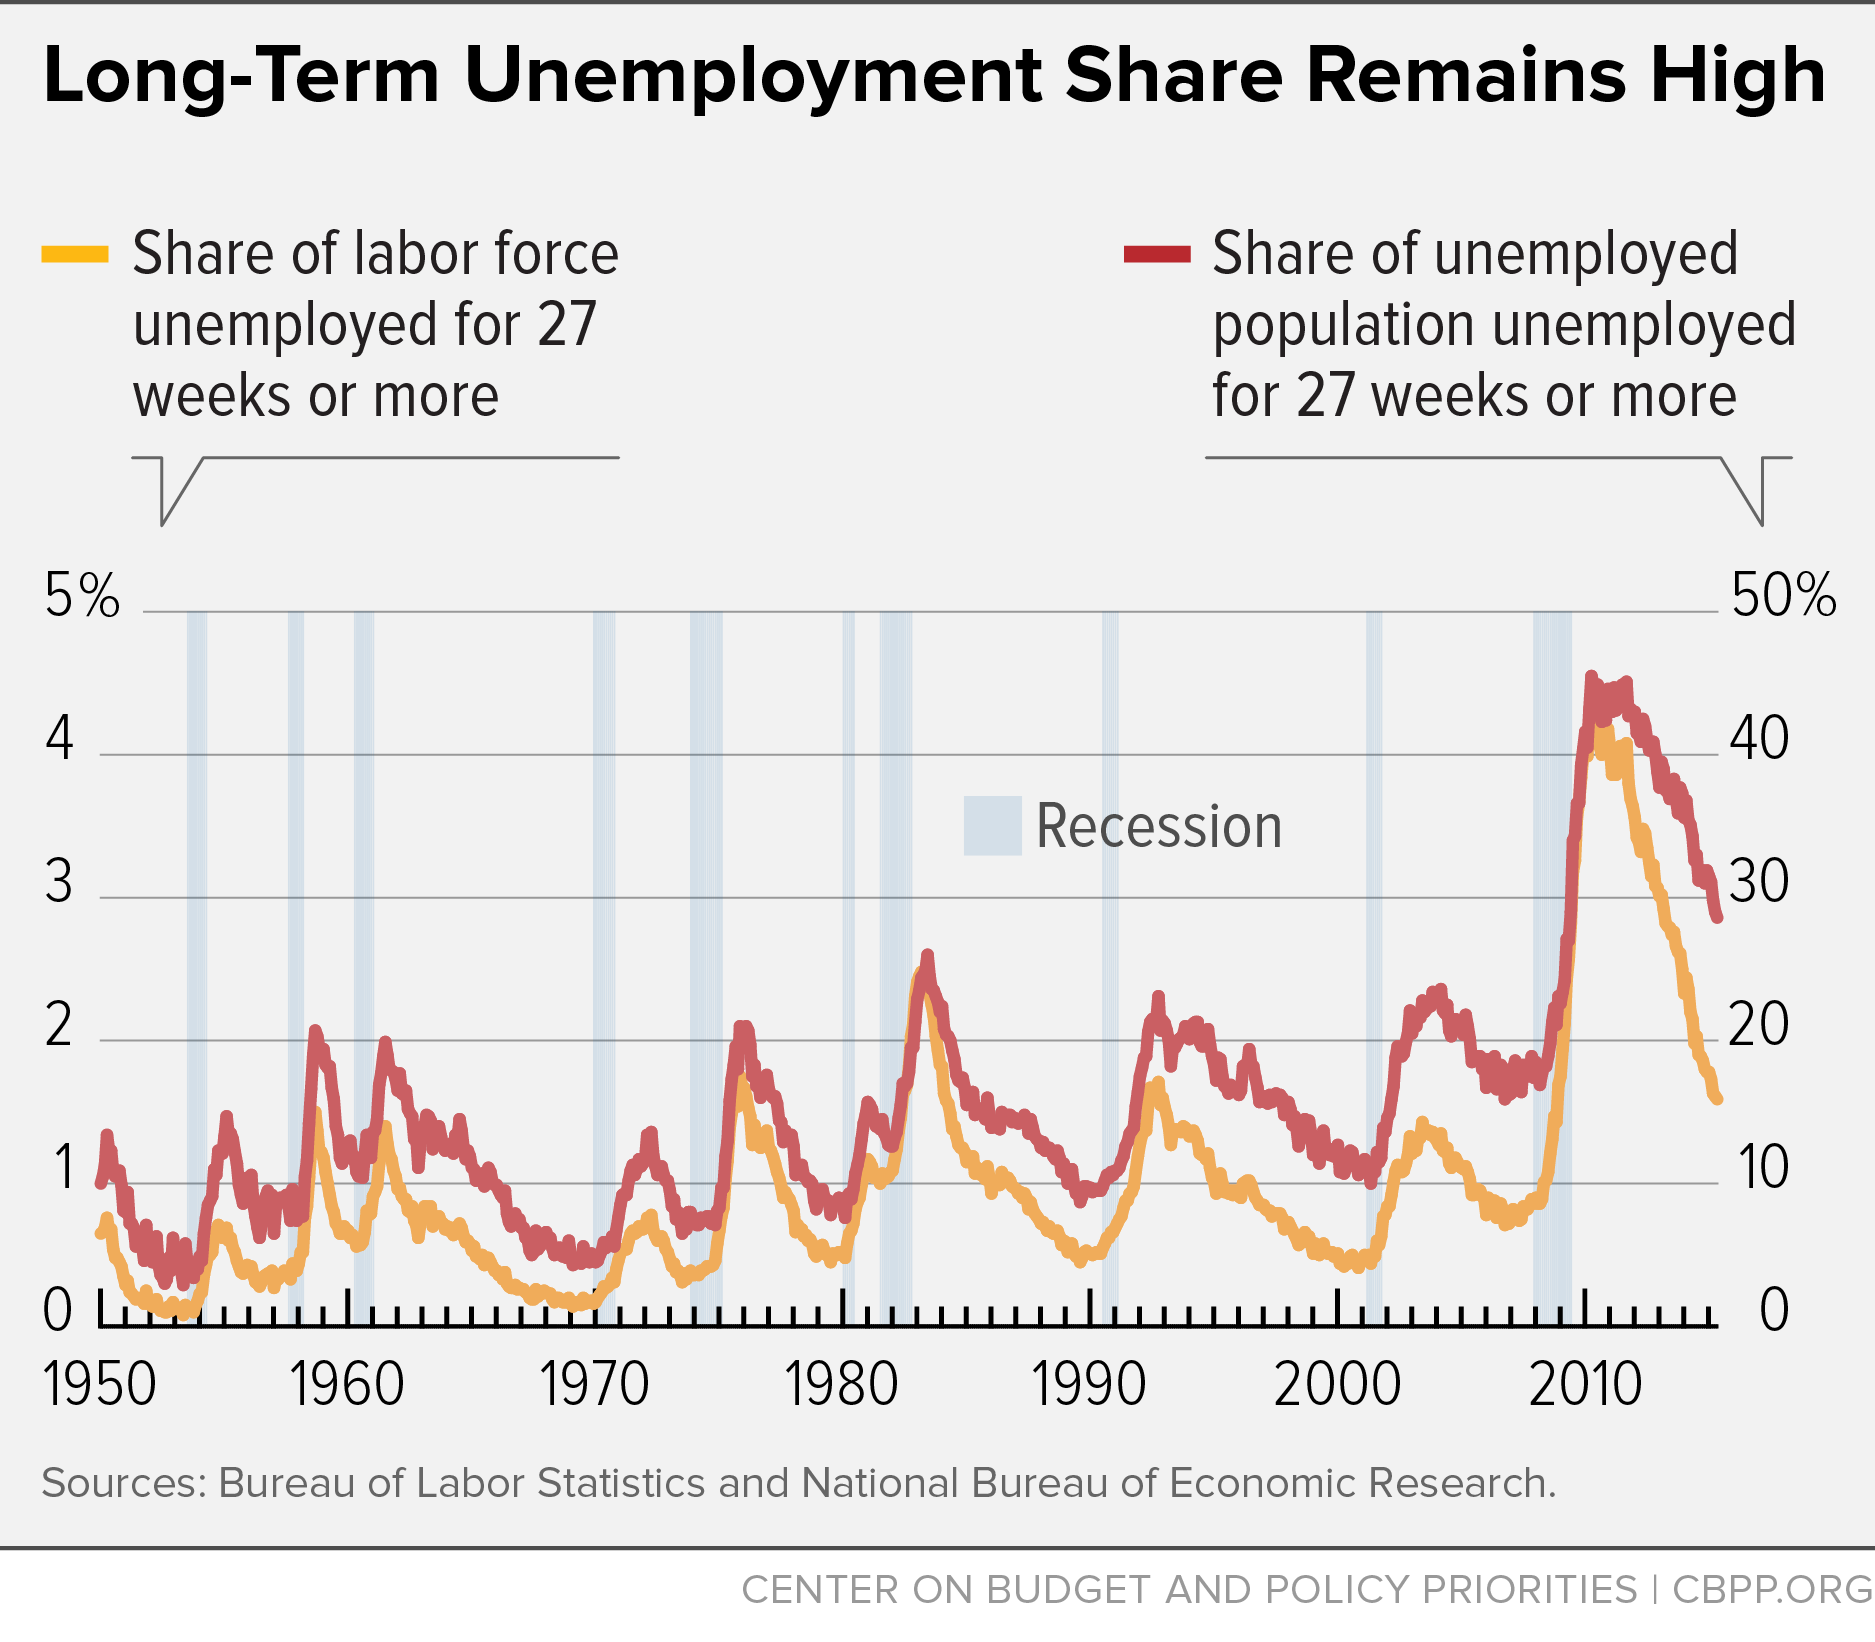 Long-Term Unemployment Share Remains High (June 5, 2015)